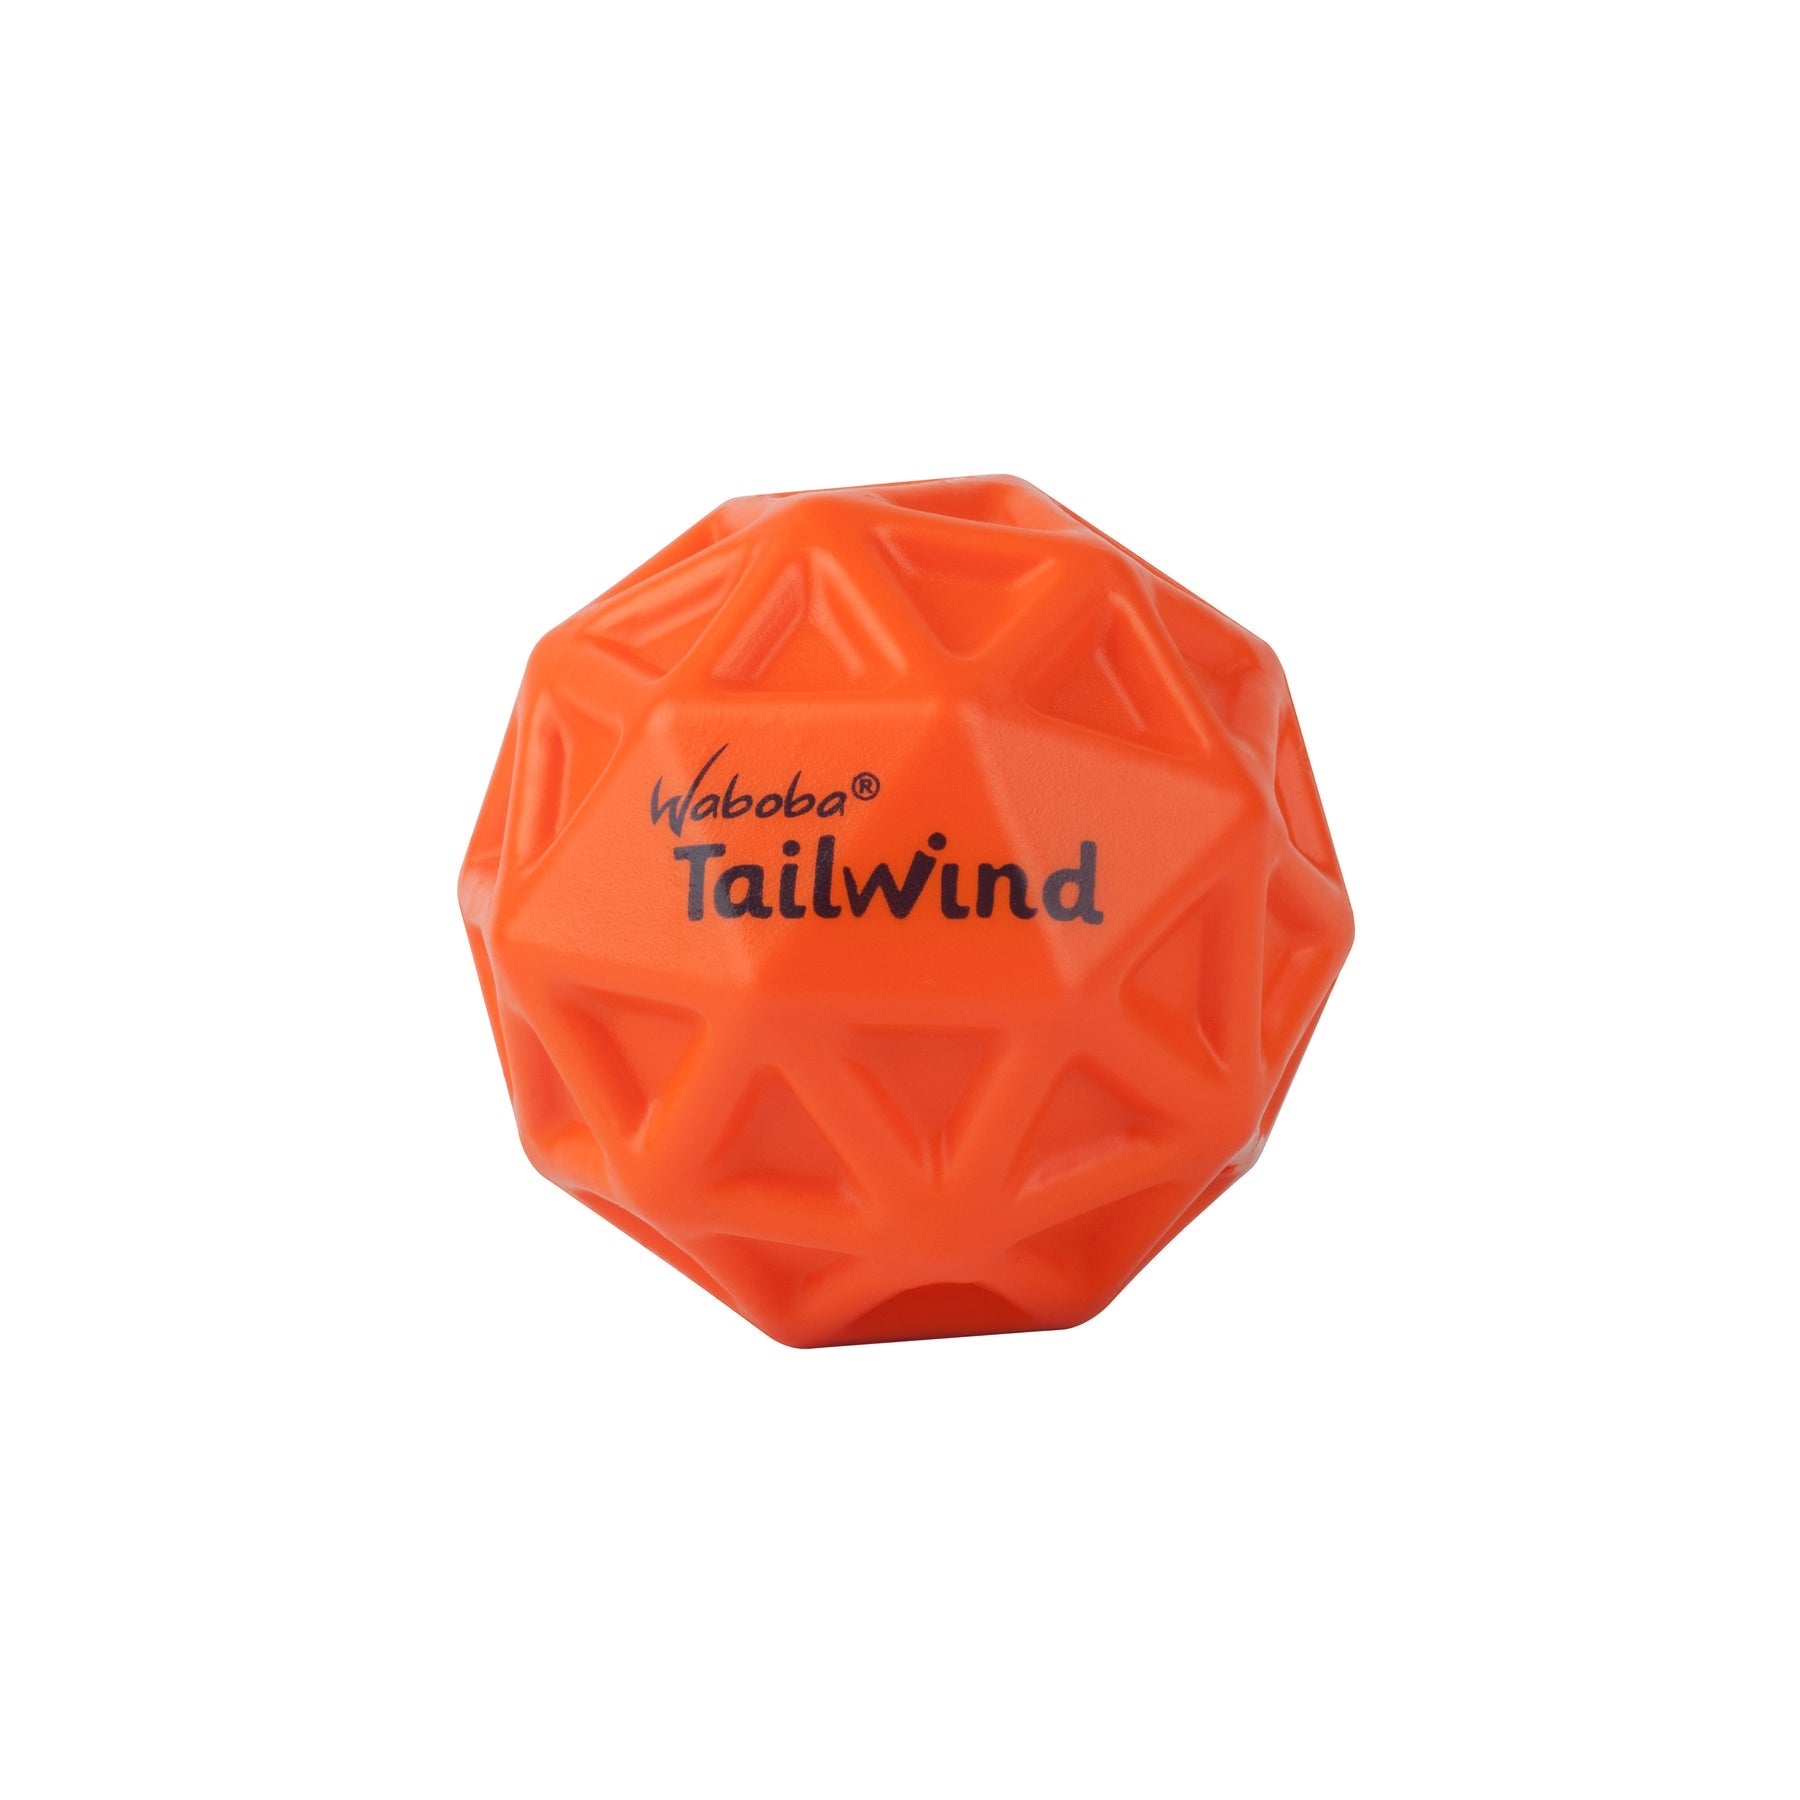 Waboba Tailwind - Retrieval Ball    